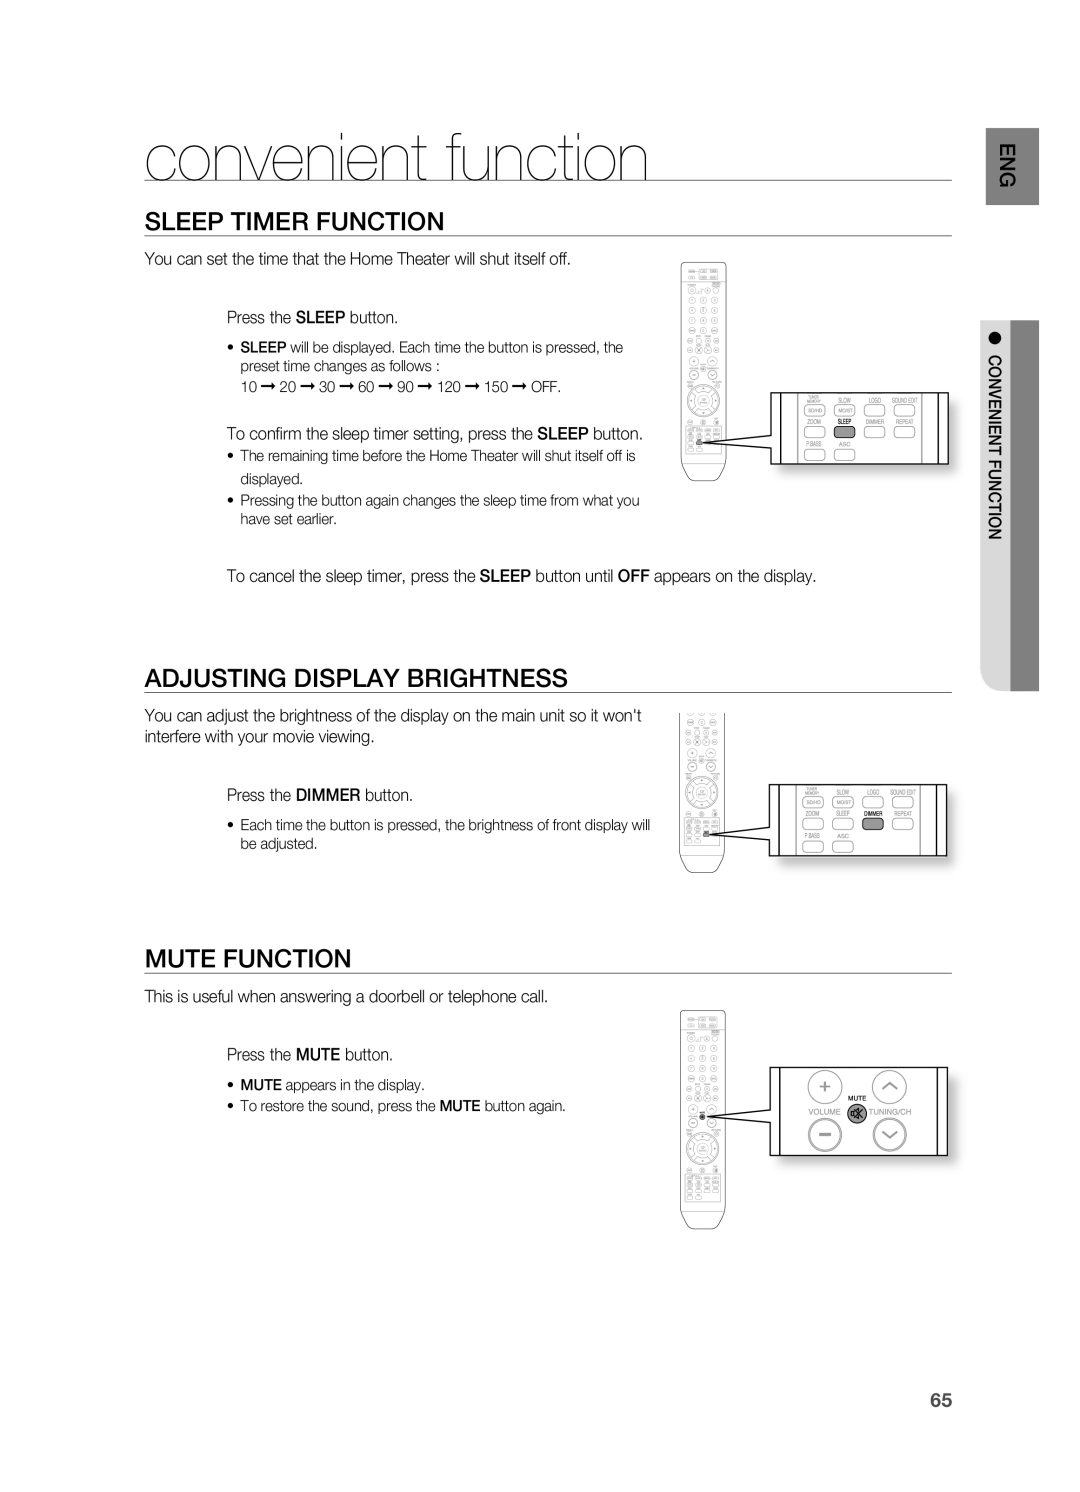 Samsung HT-TWZ415 user manual convenient function, SLEEP TIMEr FUNCTION, ADJUSTINg DISPLAY BrIgHTNESS, Mute Function 